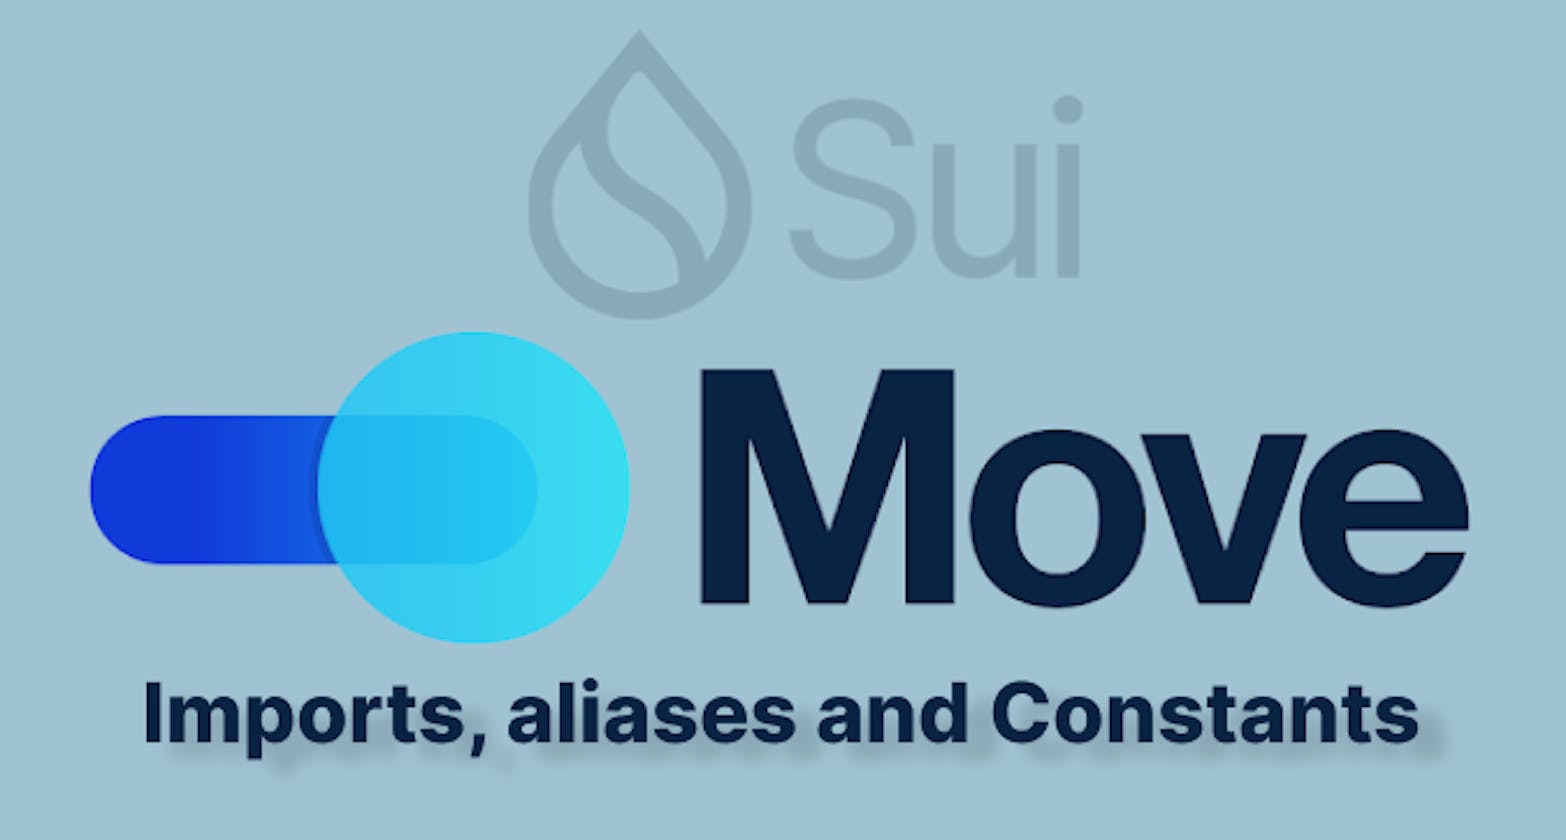 Sui Move Language - Imports, aliases, Constants